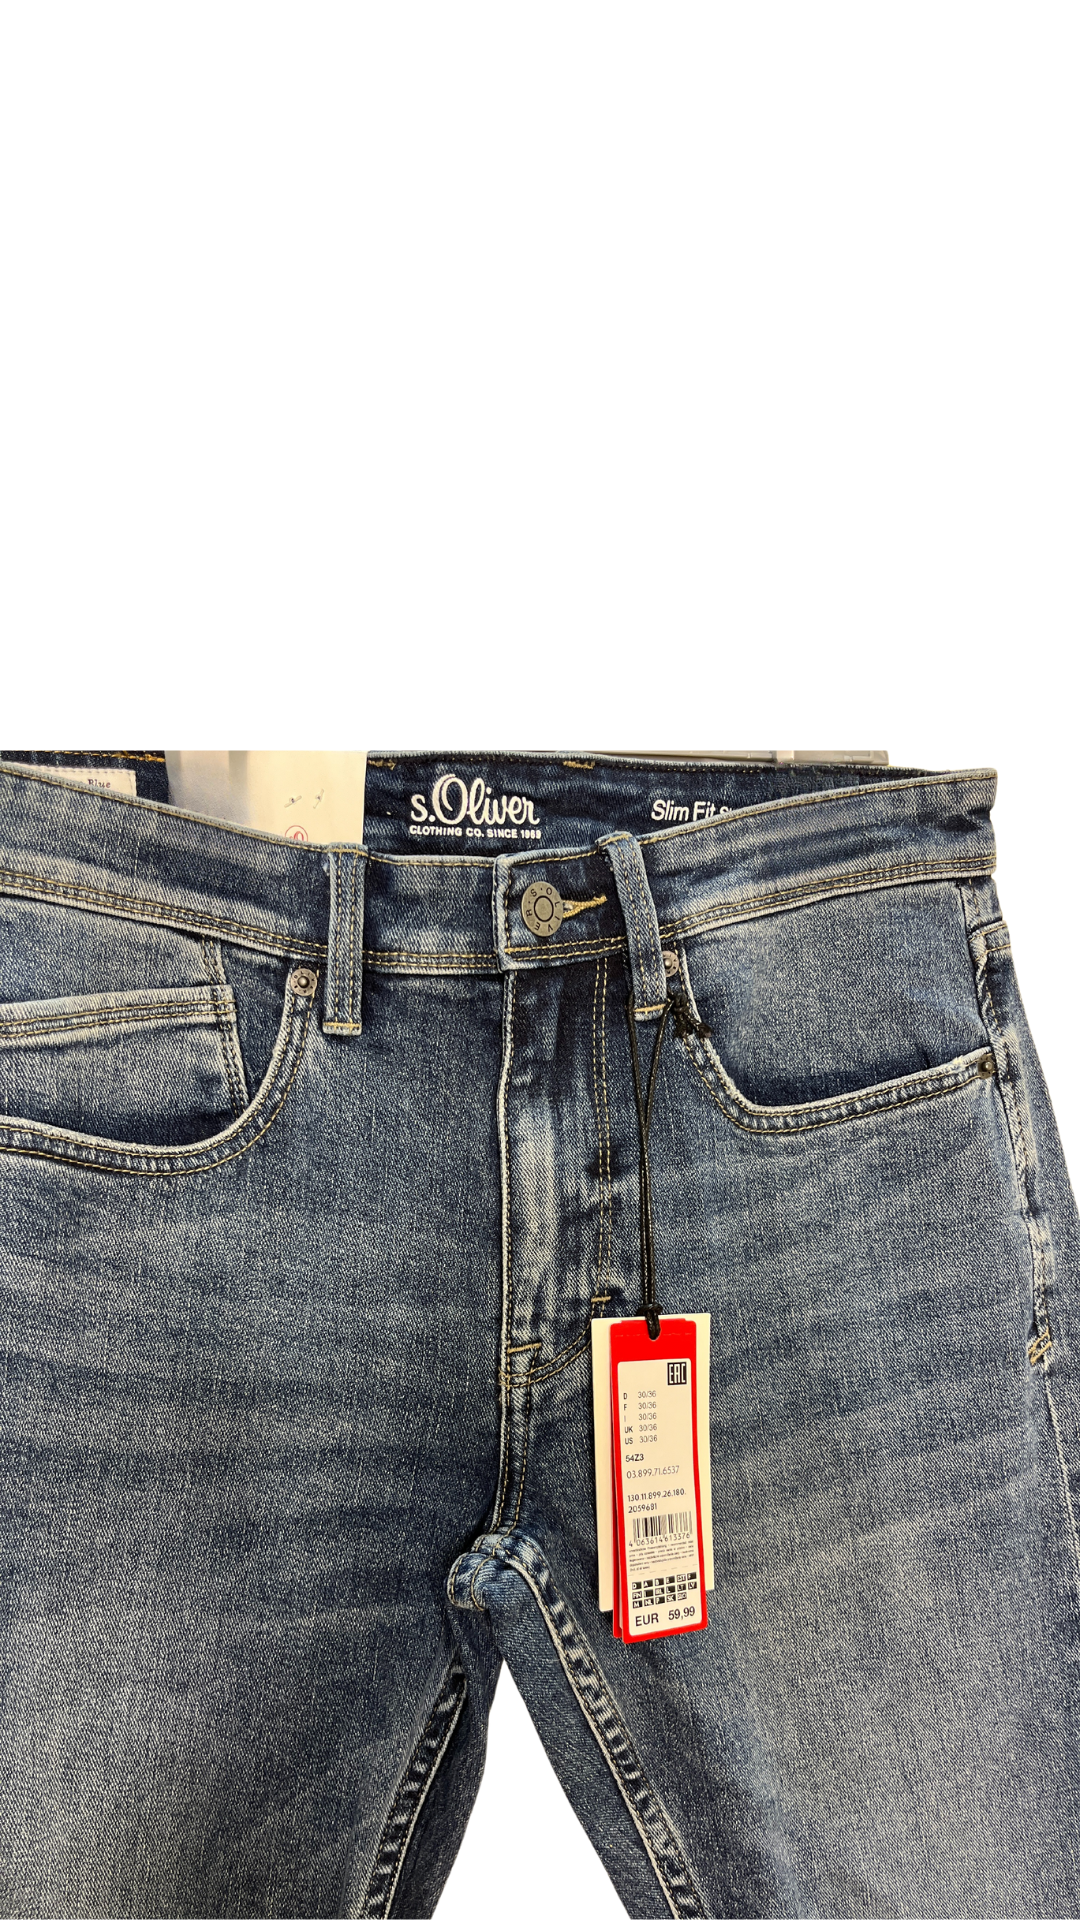 men's jeans S.oliver Dark blue Slim fit Straight jeans 76.2 waist 91.44 length cm جينز للرجال S.oliver أزرق داكن جينز مستقيم بقصة ضيقة